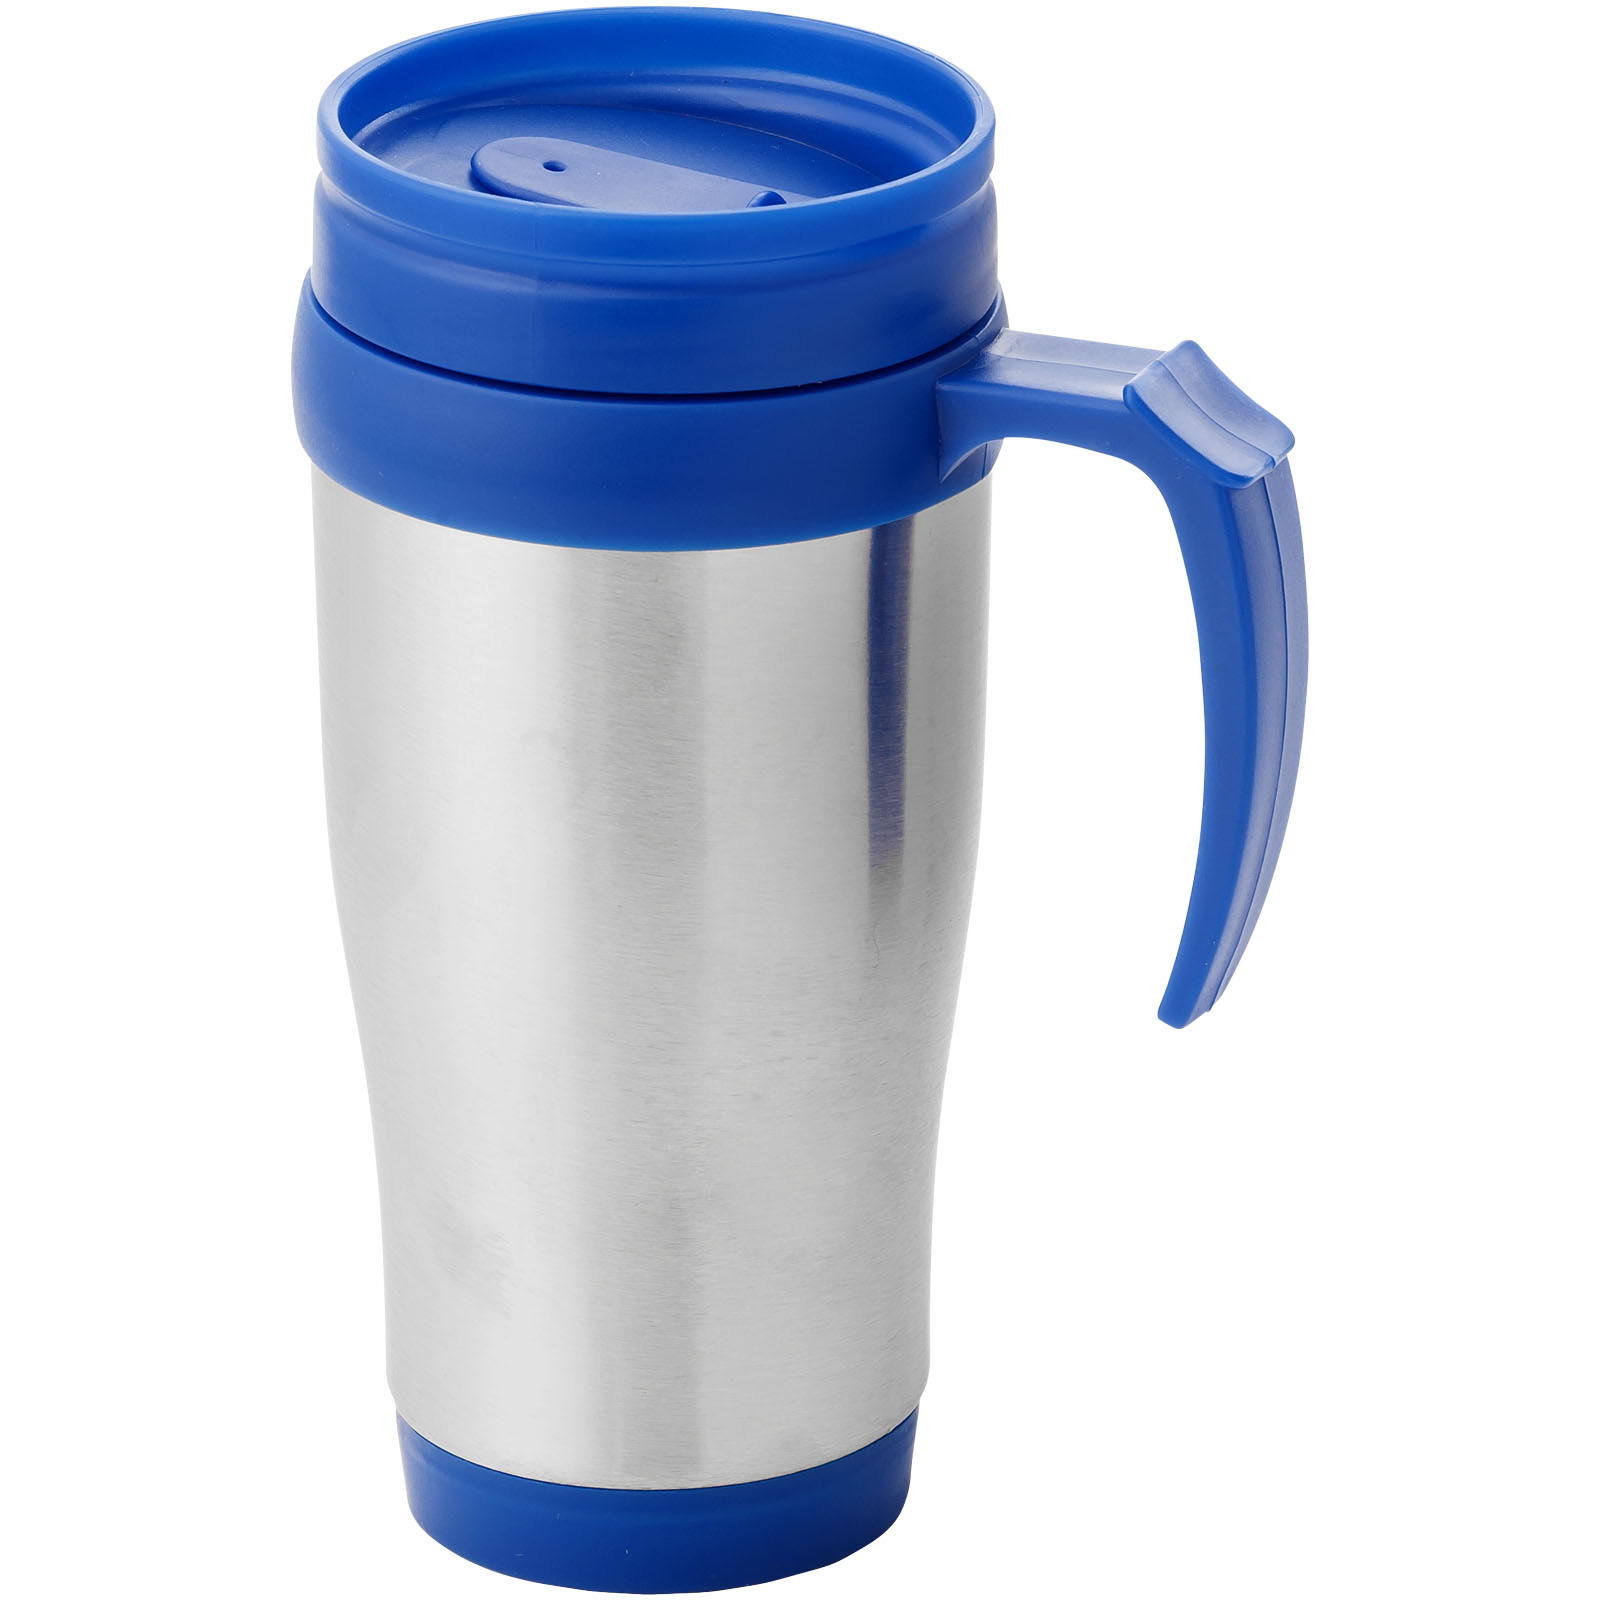 Drinkware - Sanibel 400 ml insulated mug